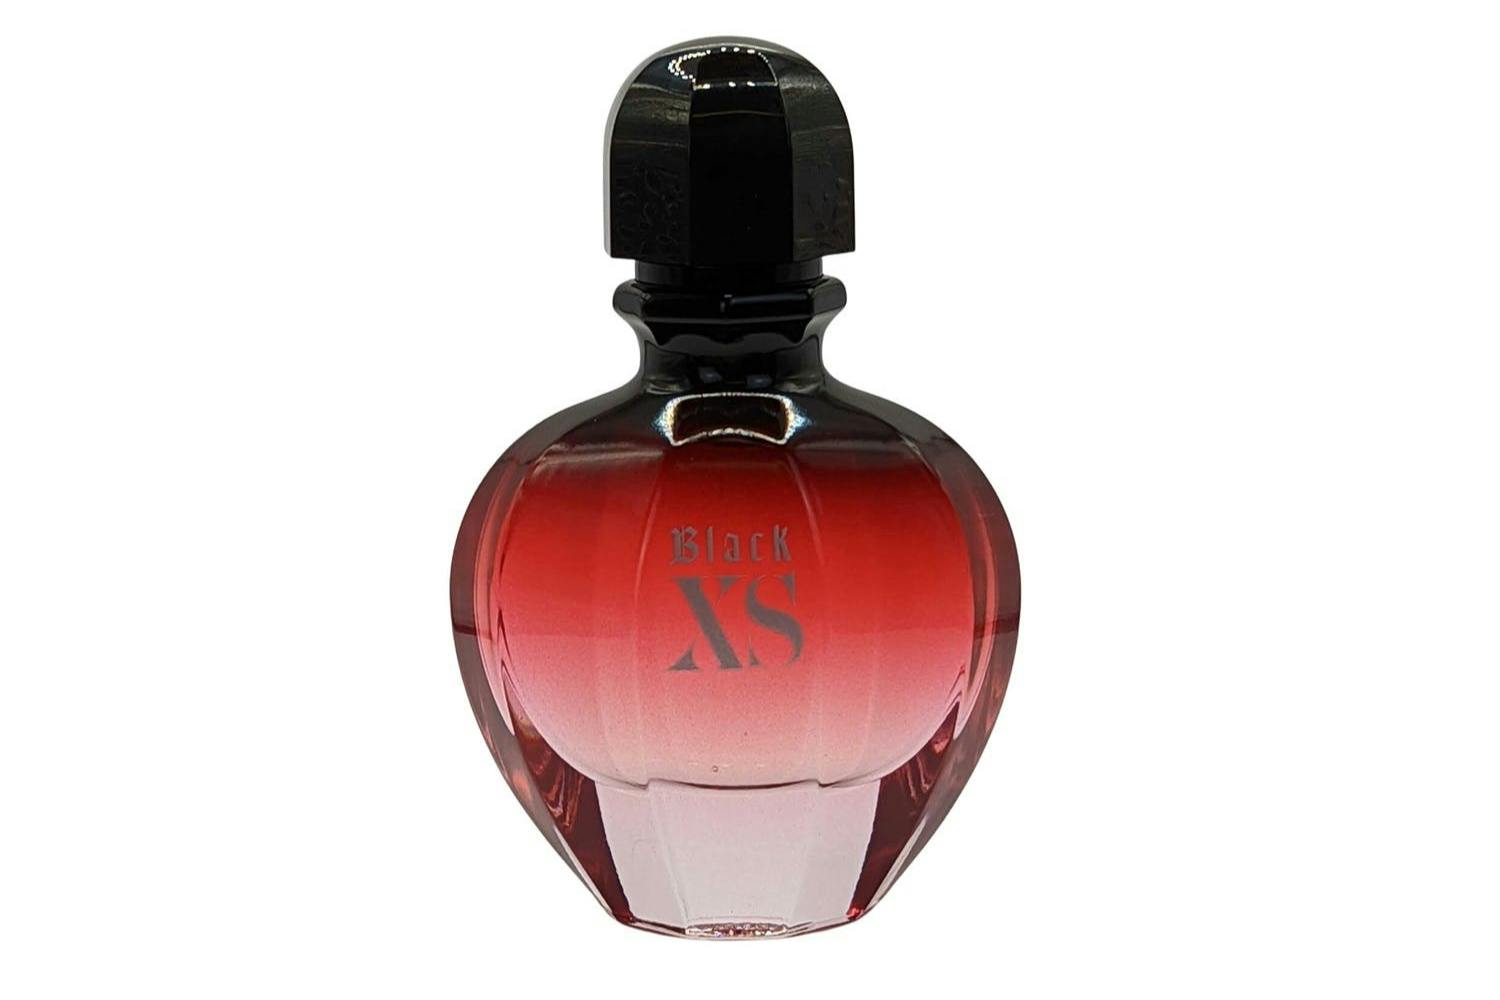 Paco Rabanne Black Xs For Her Eau De Parfum | 30ml | Ireland